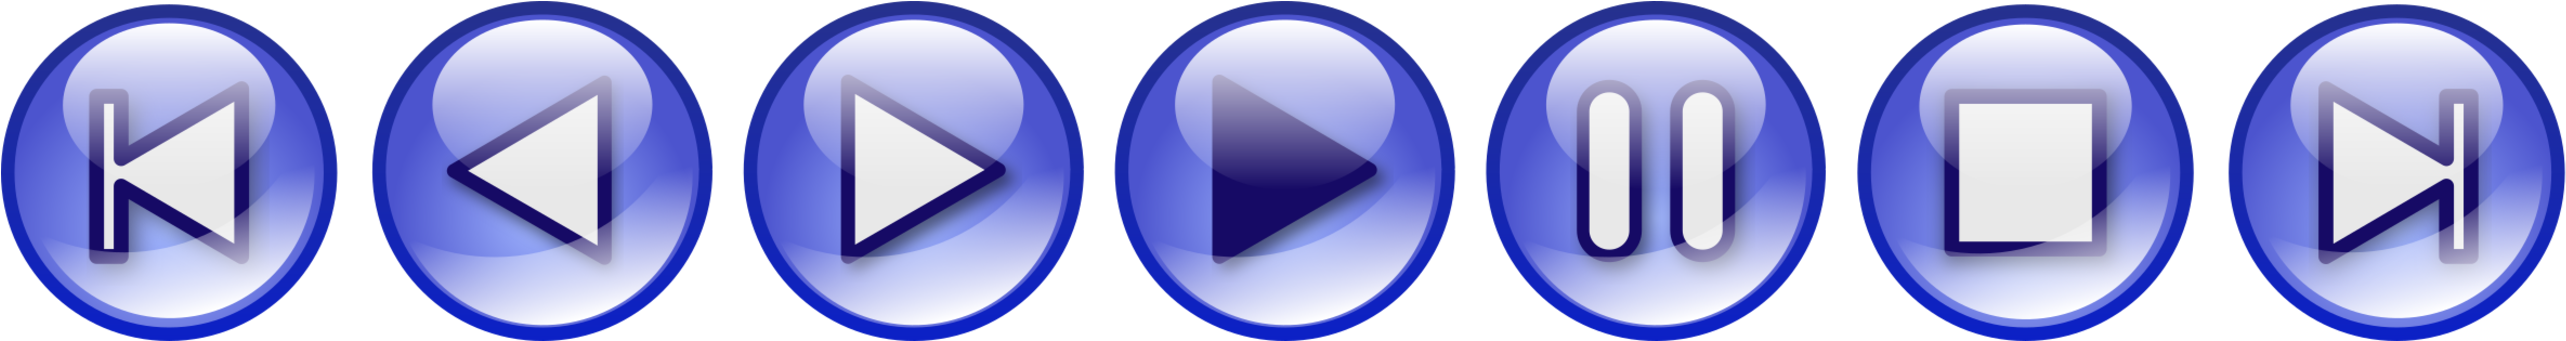 Tinypic Video Logo Brand Web Hosting Service - Stop Button (2599x340)